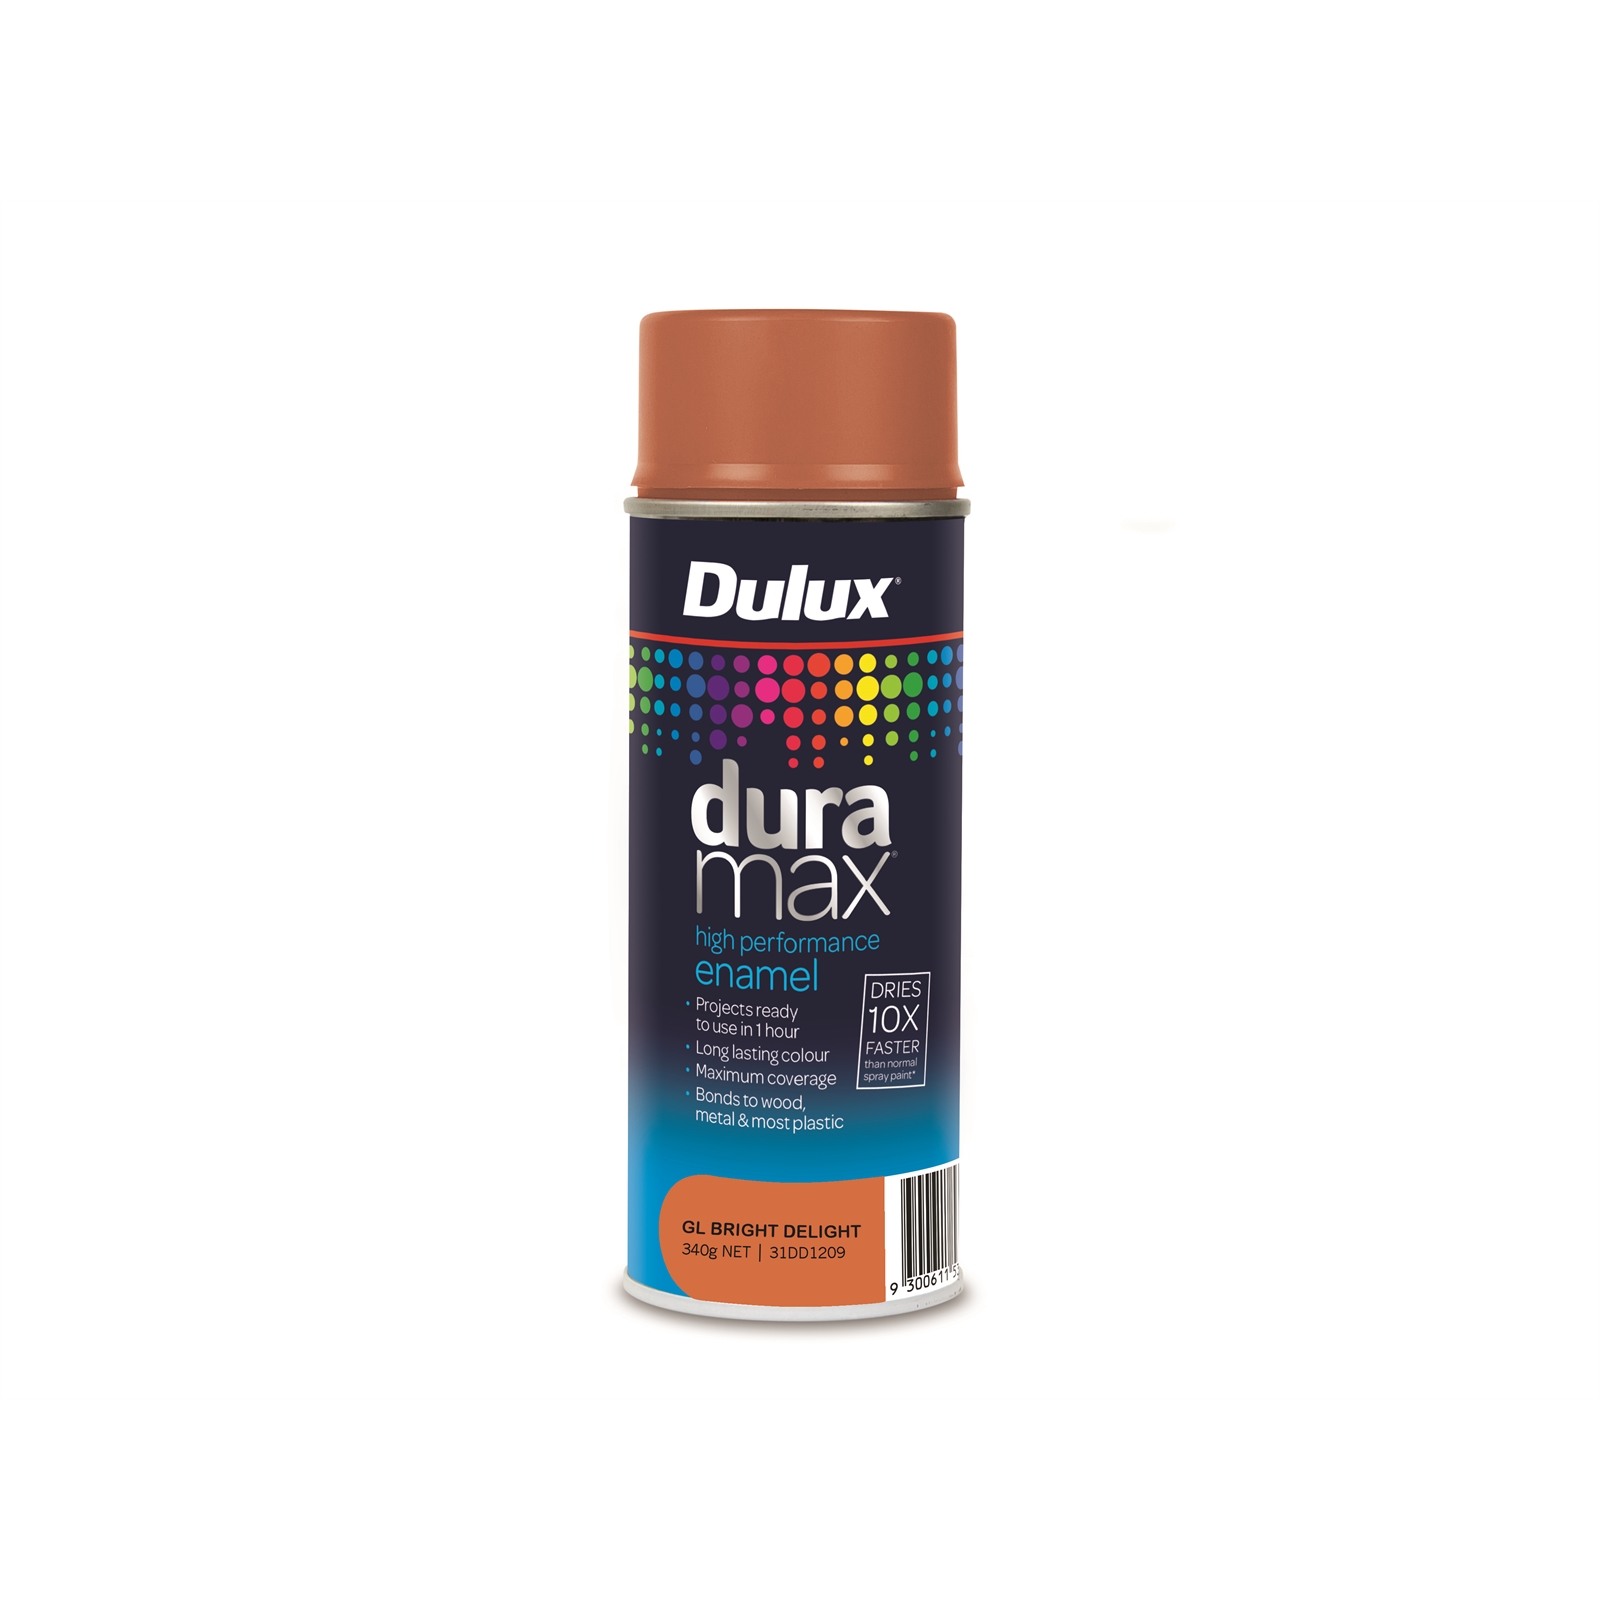 Dulux Duramax 340g Gloss Bright Delight Spray Paint